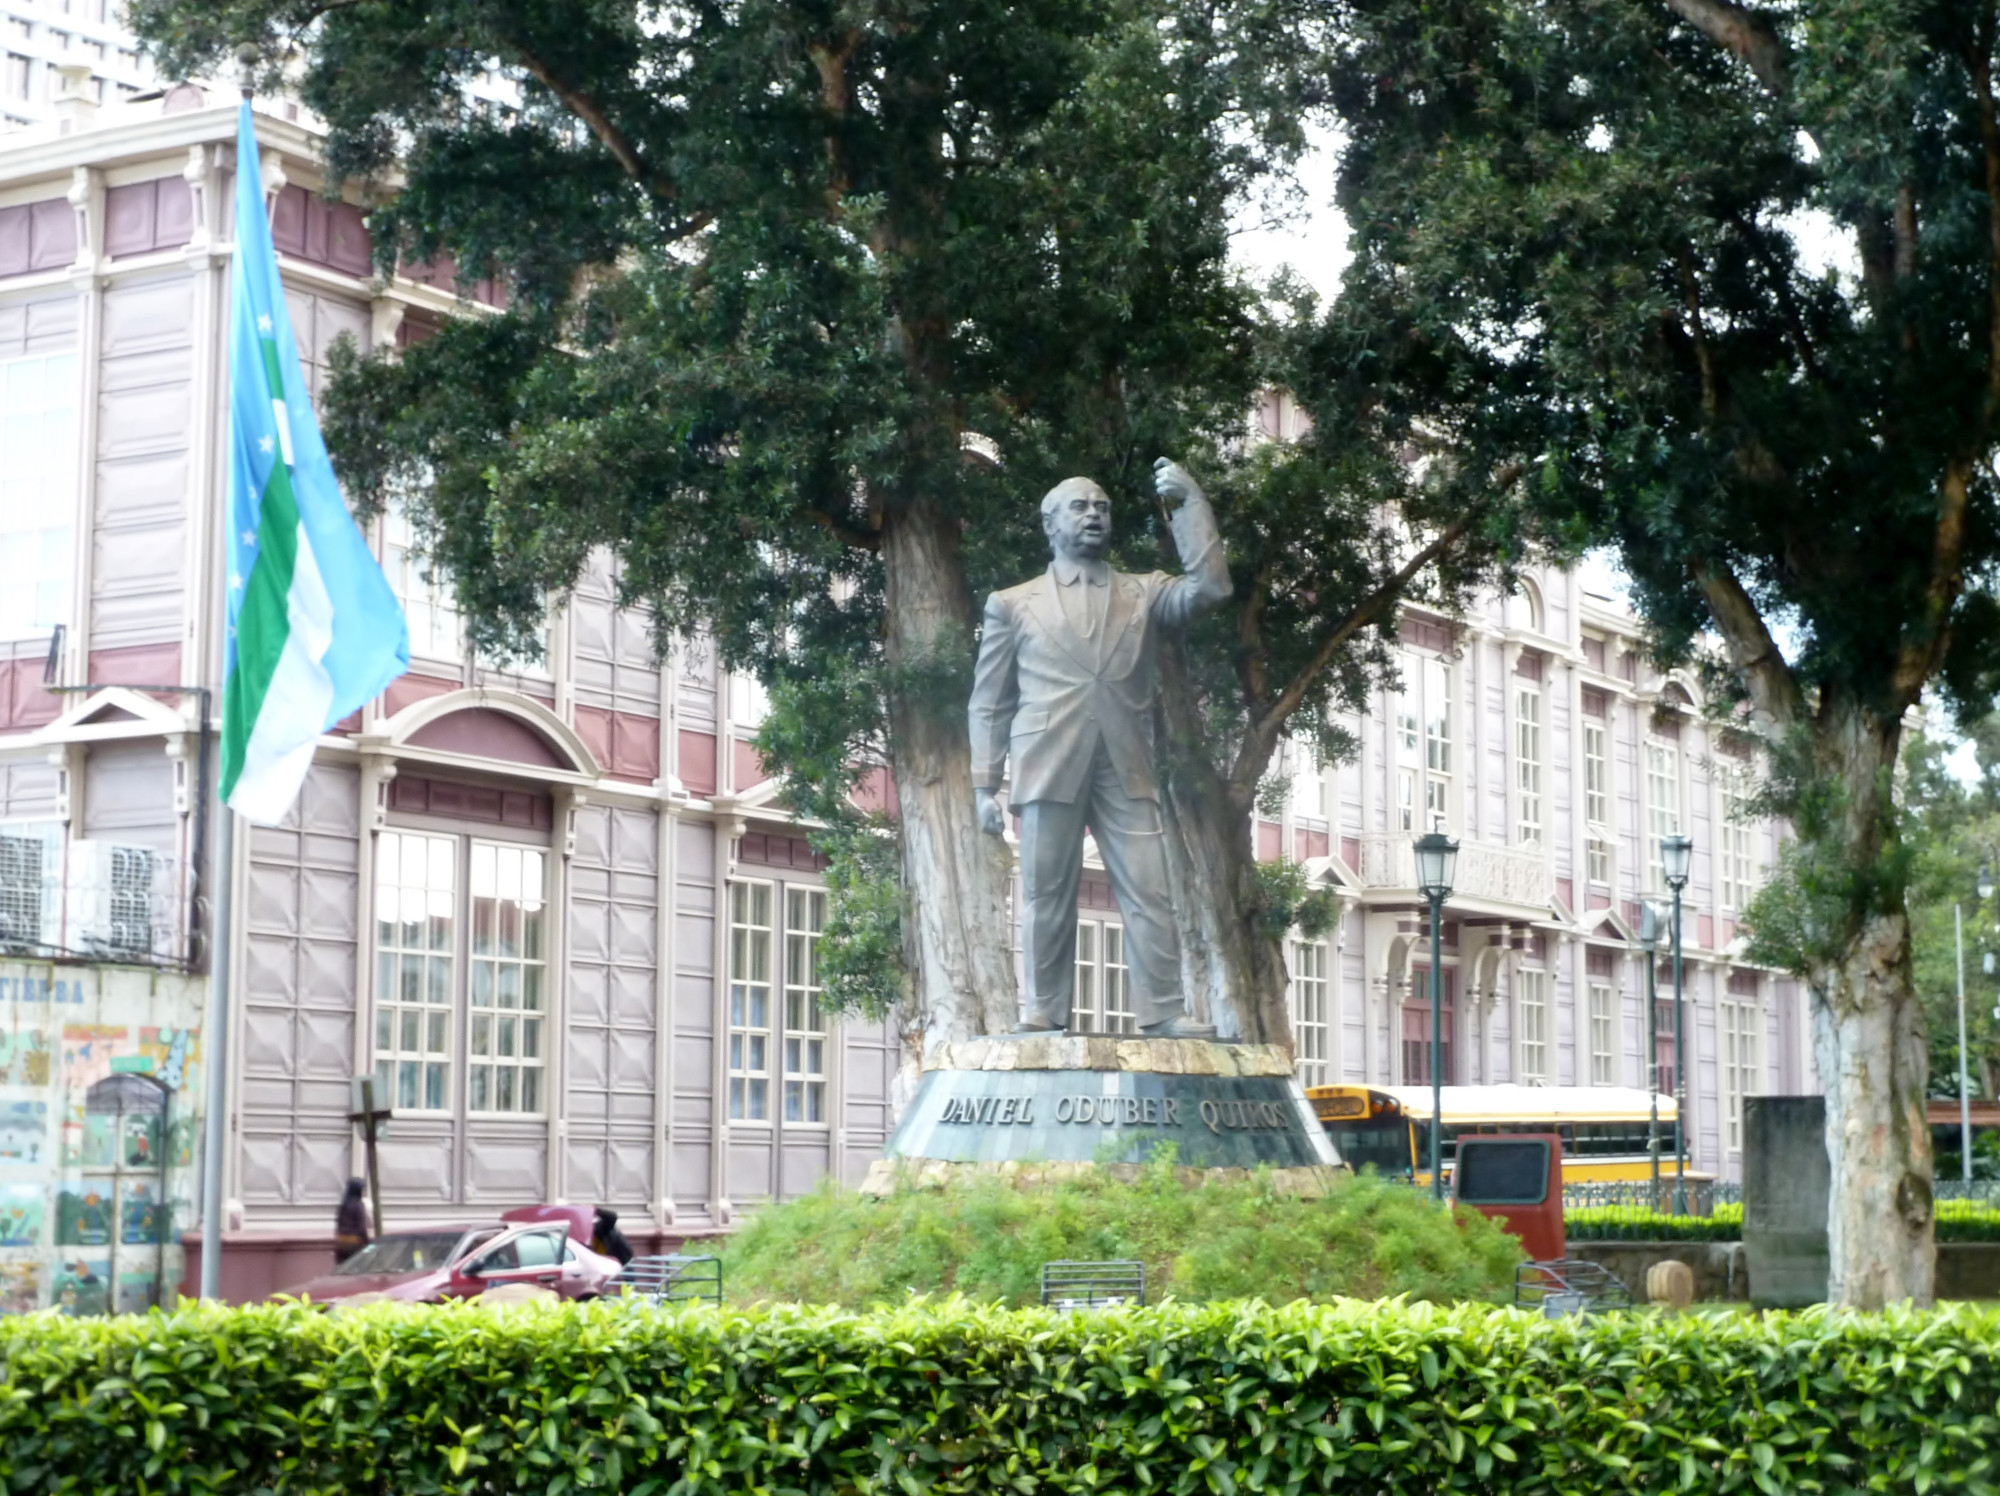 Daniel Oduber Quiros Statue Morazán Park